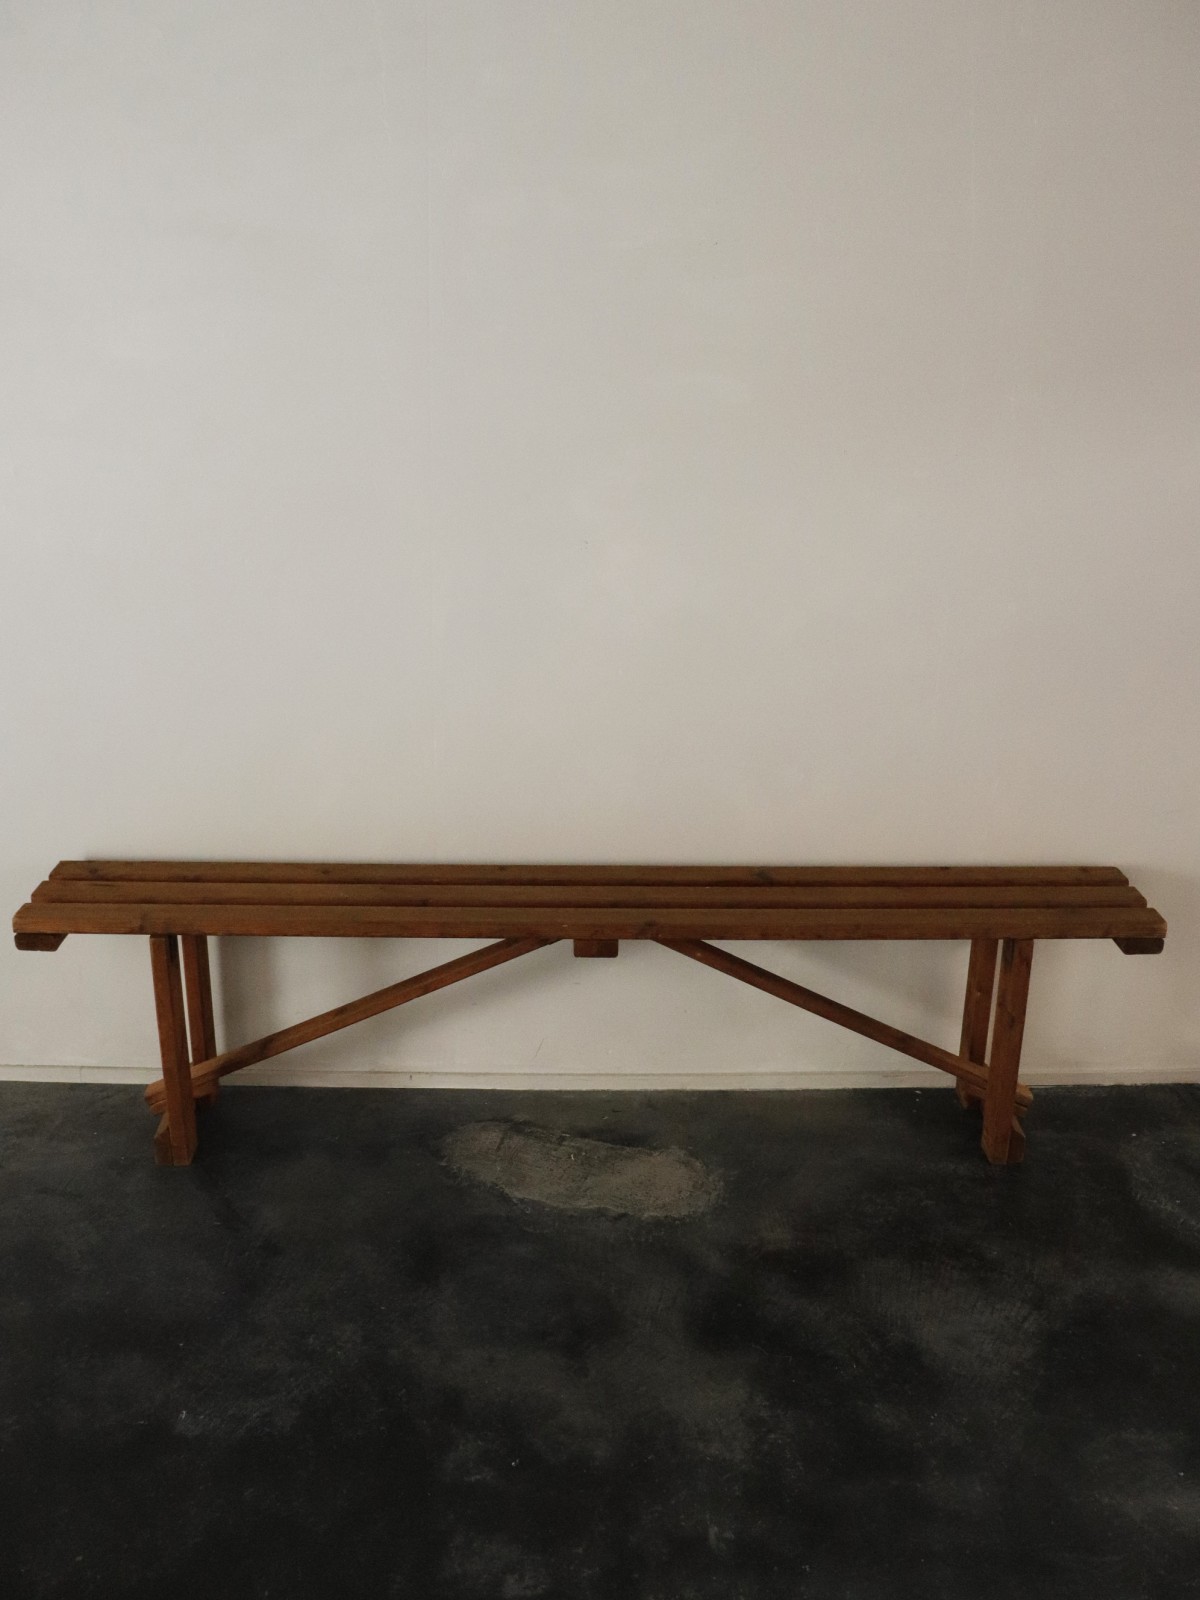 1930's, folding bench, wood bench